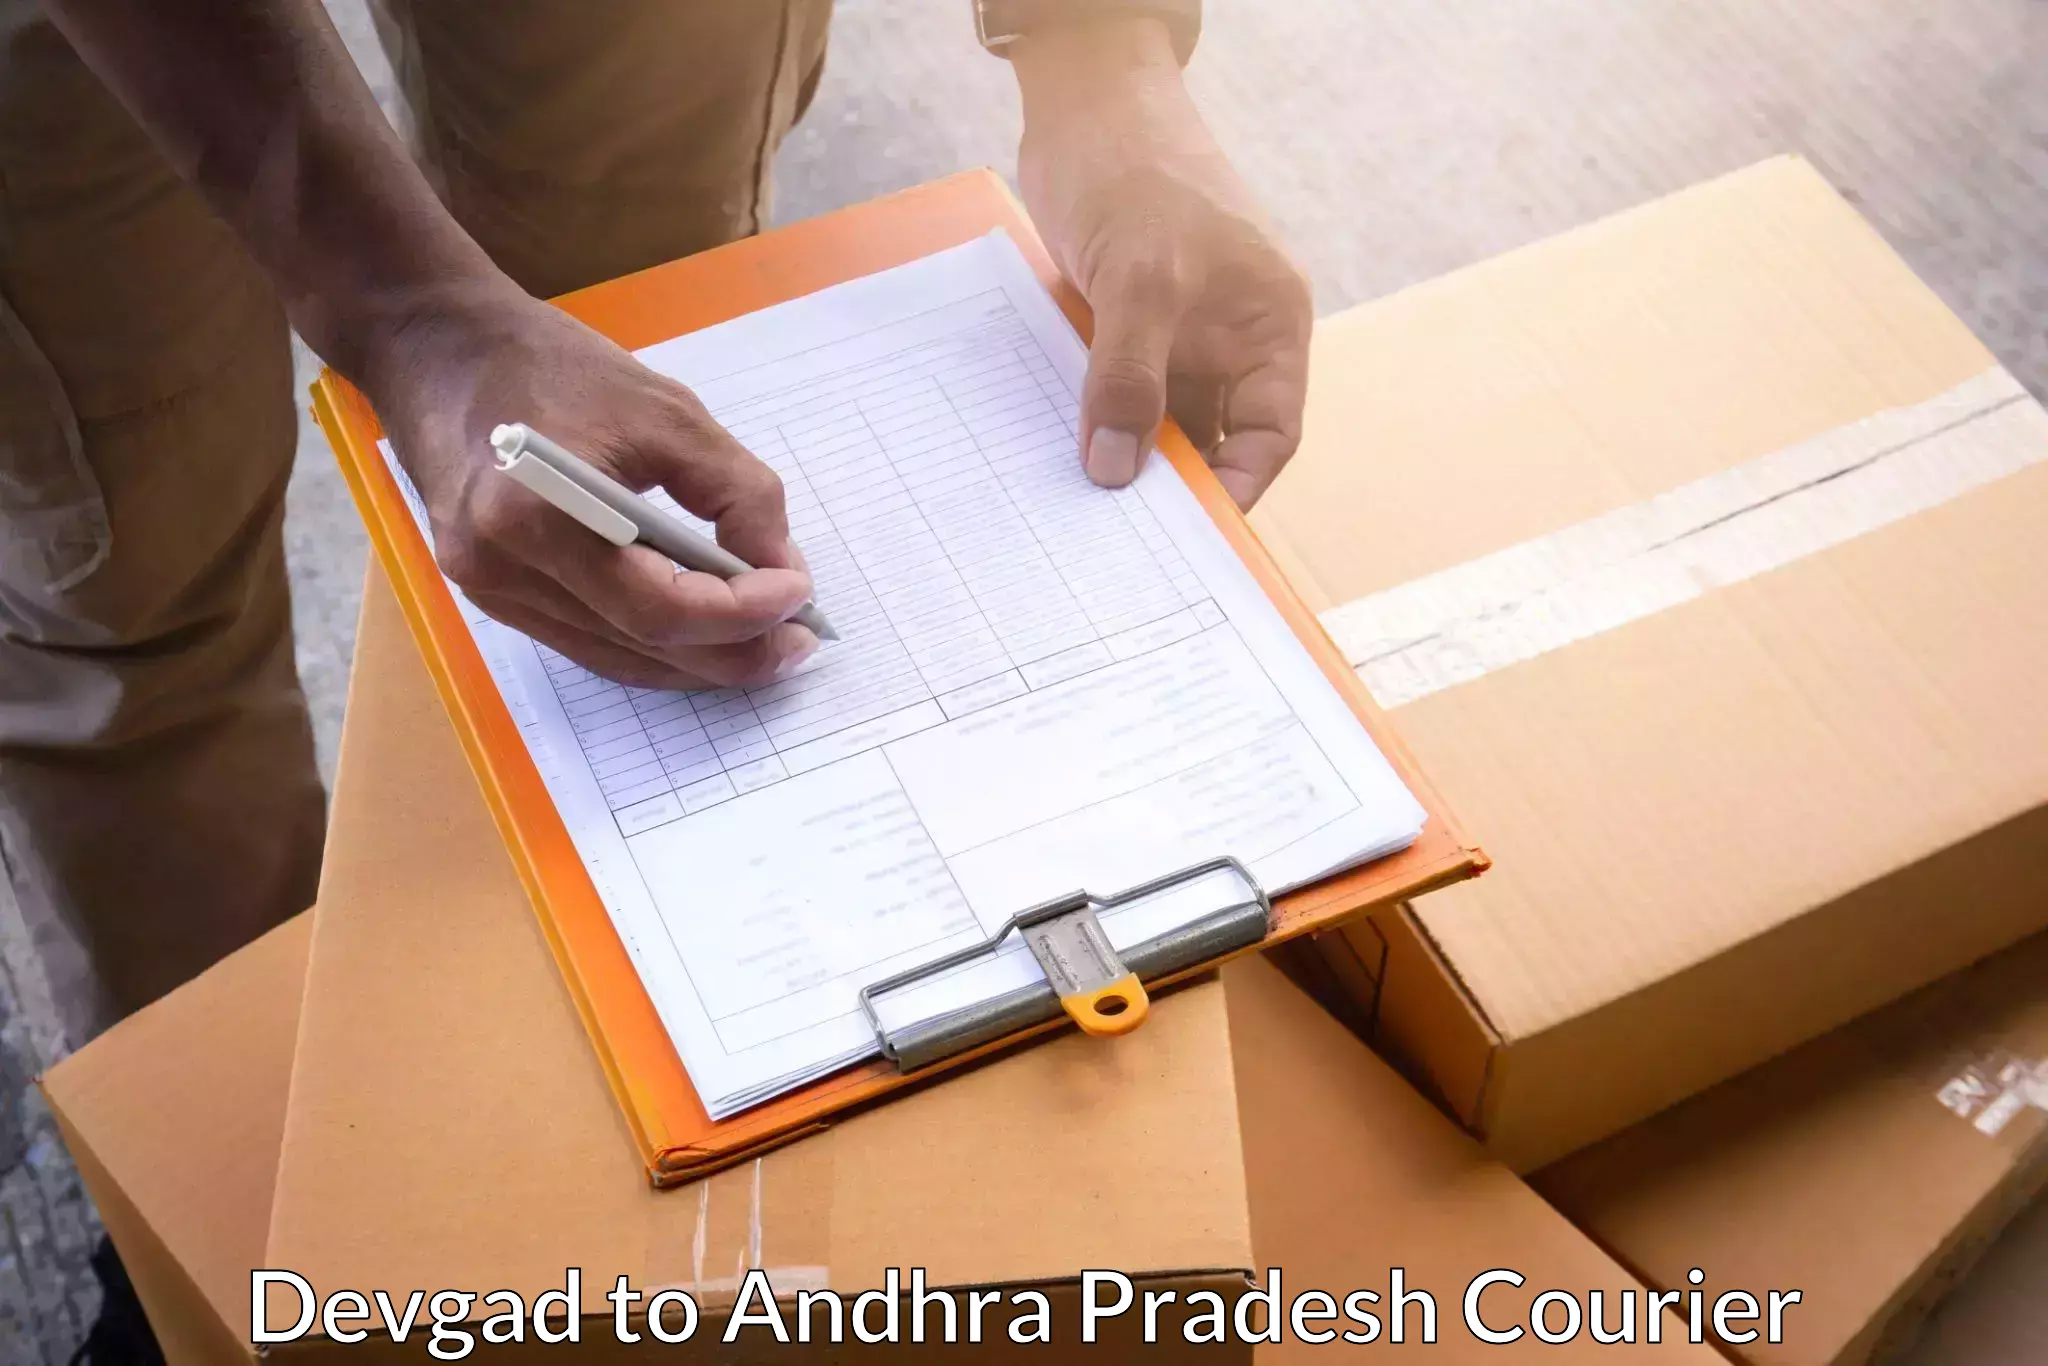 Global shipping networks Devgad to Andhra Pradesh